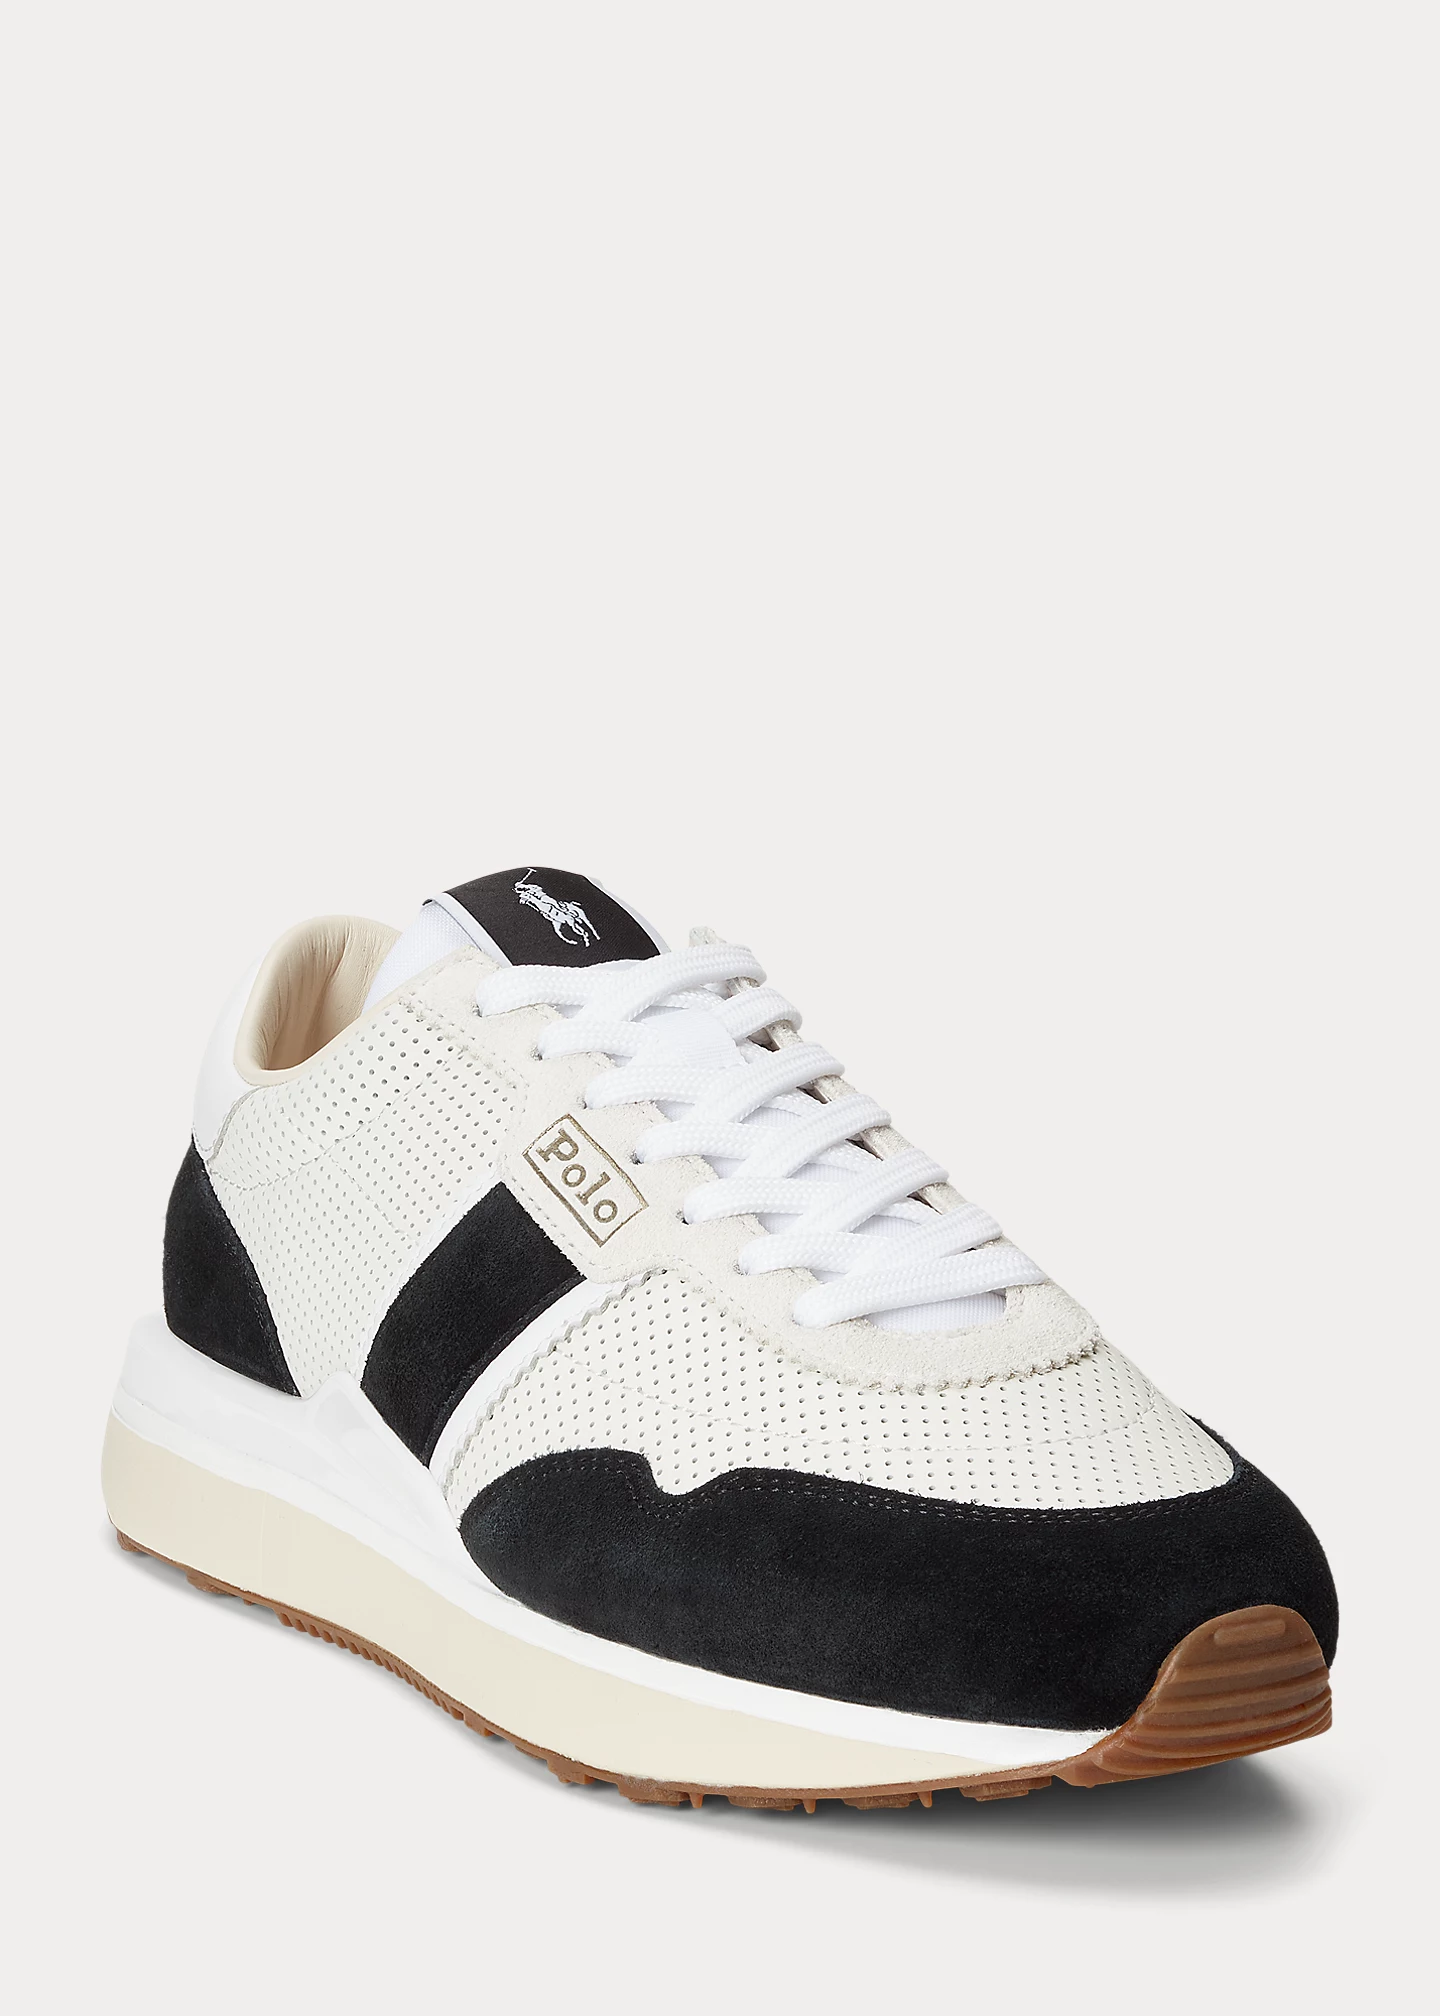 distinctive fashion Train 89 Leather-Suede Sneaker-,$18.50